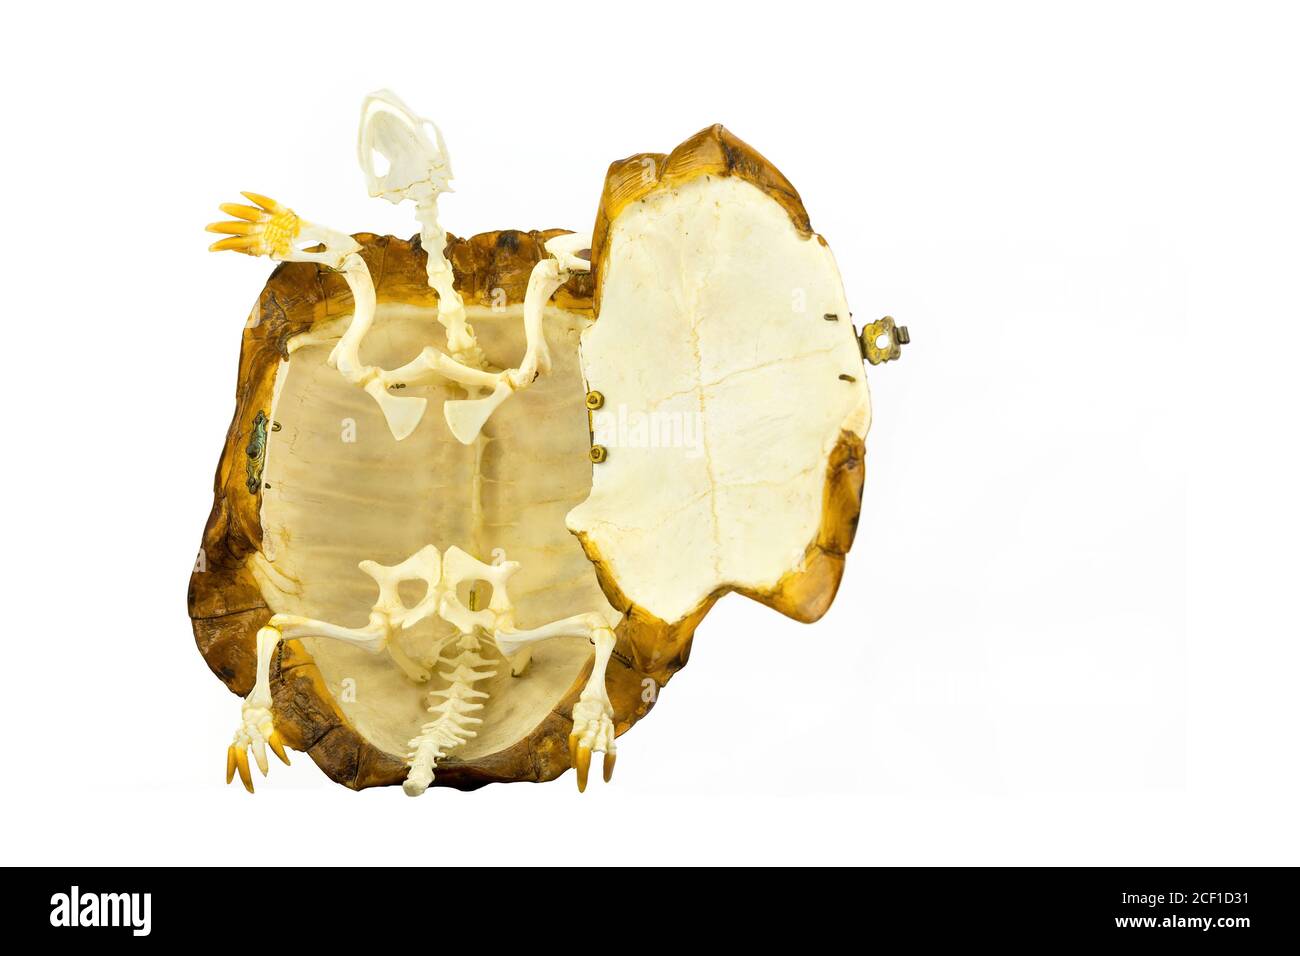 Inside of turtle with skeleton isolated on white background Stock Photo